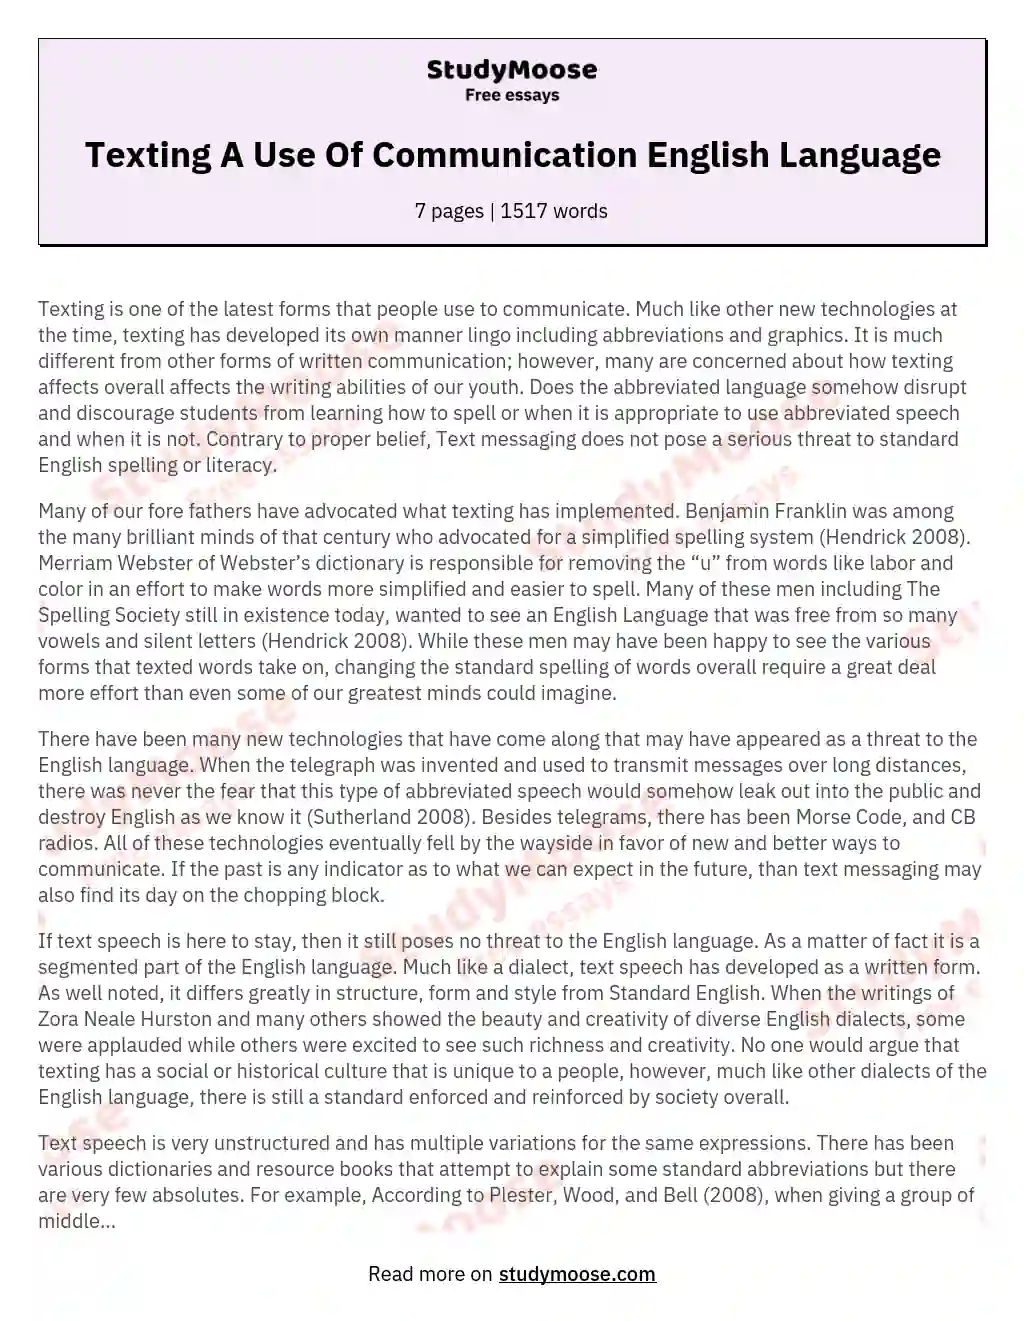 Texting A Use Of Communication English Language essay